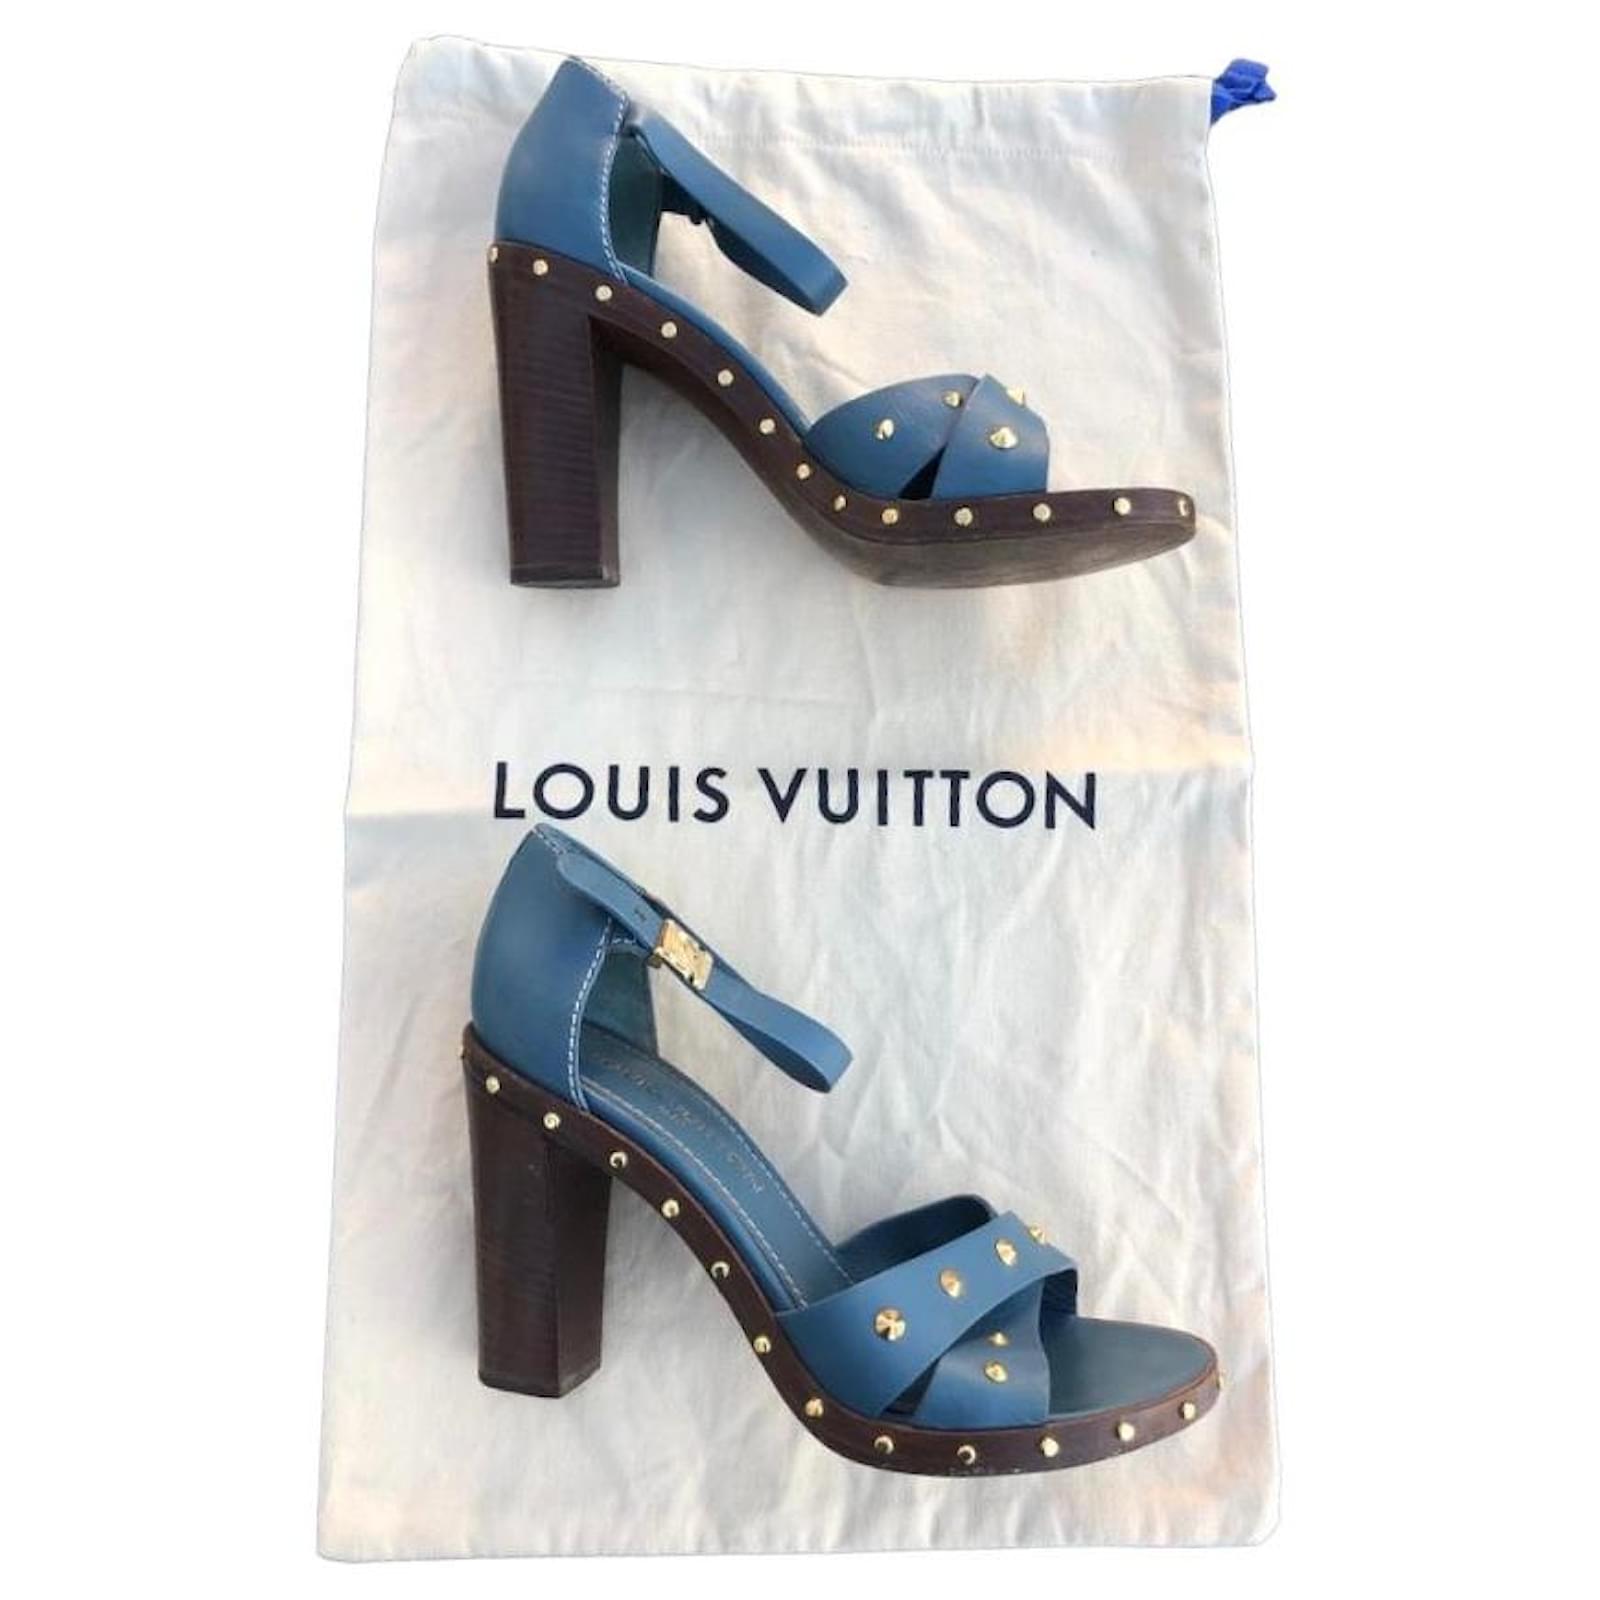 Louis Vuitton Snakeskin Eyeline Pumps Second-hand